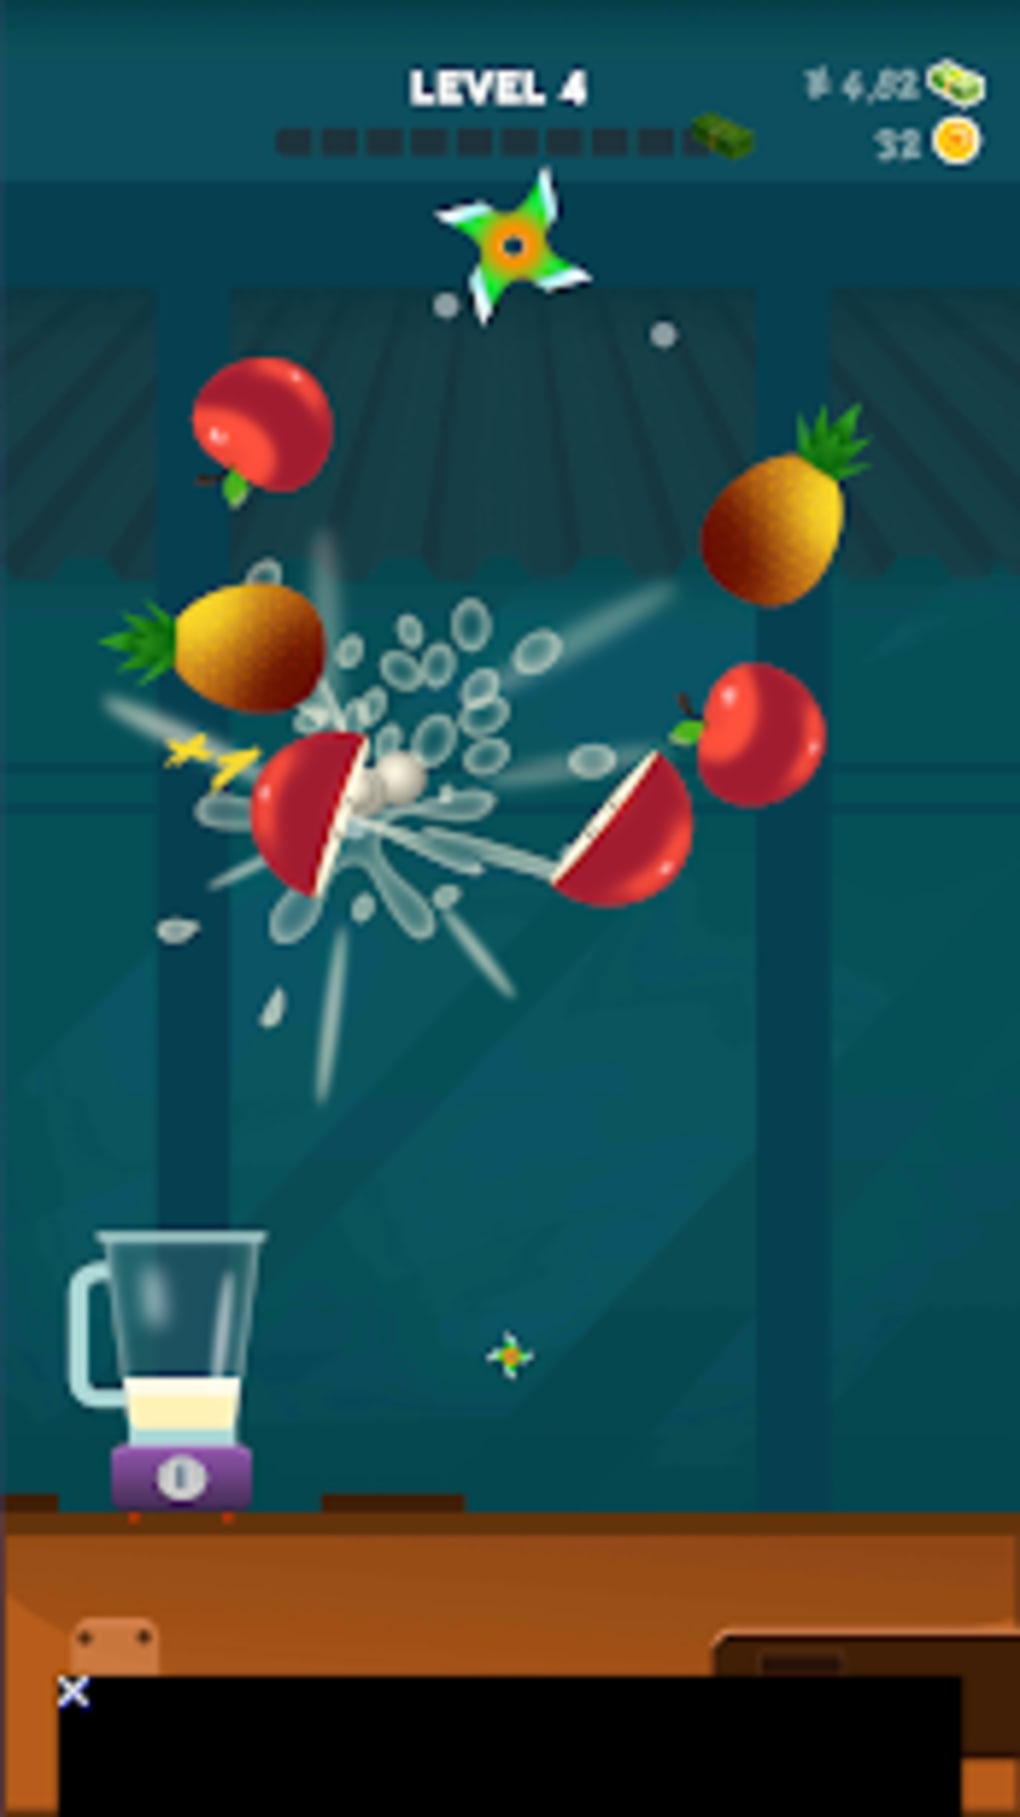 Download do APK de Fruit Cut Games para Android